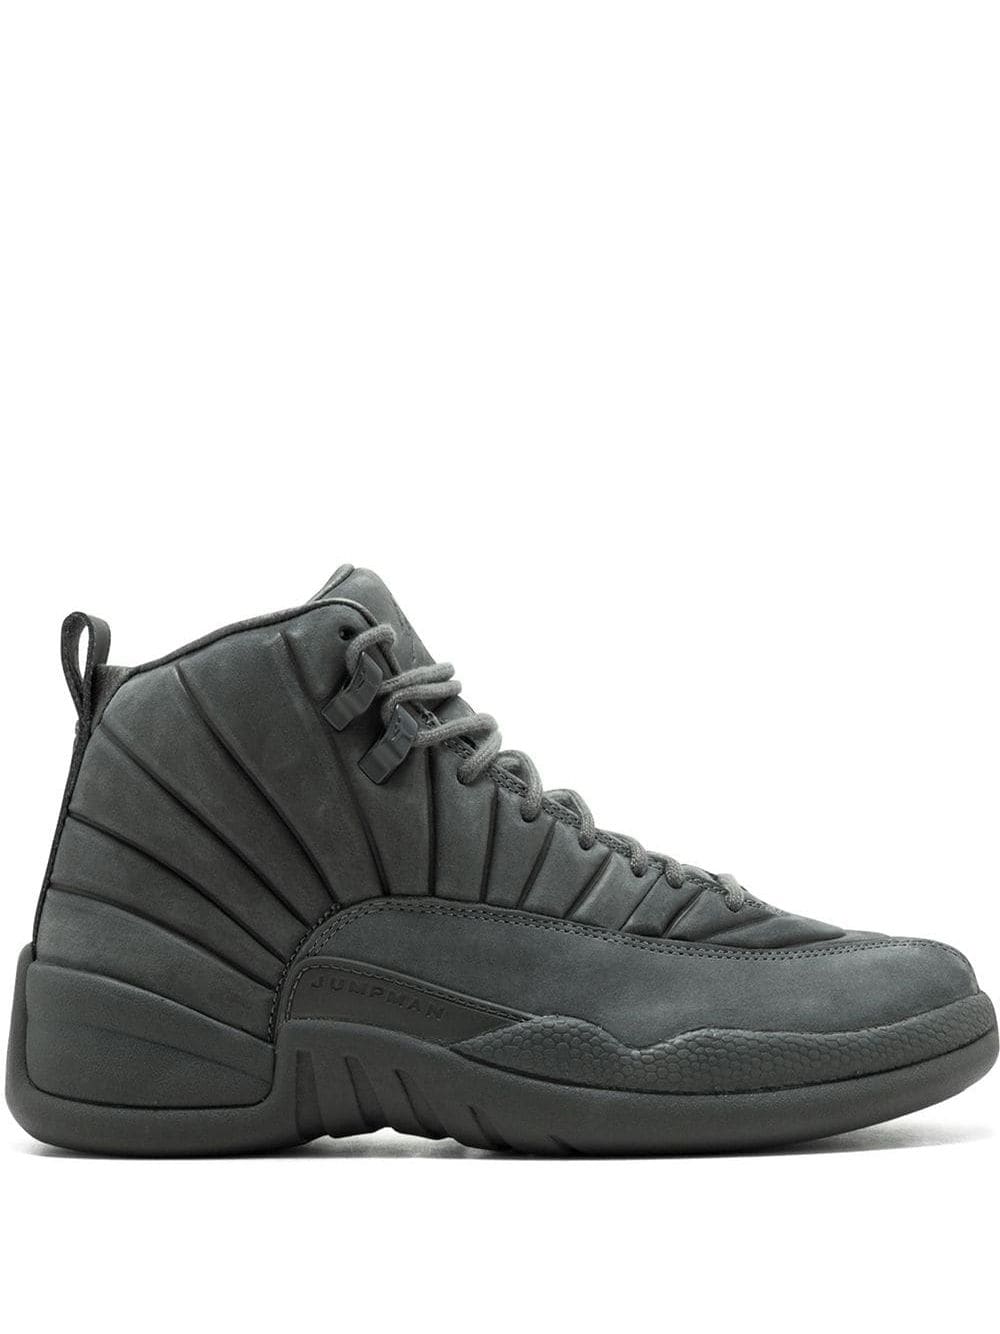 Jordan x Public School NY Air Jordan 12 Retro sneakers - Grey von Jordan